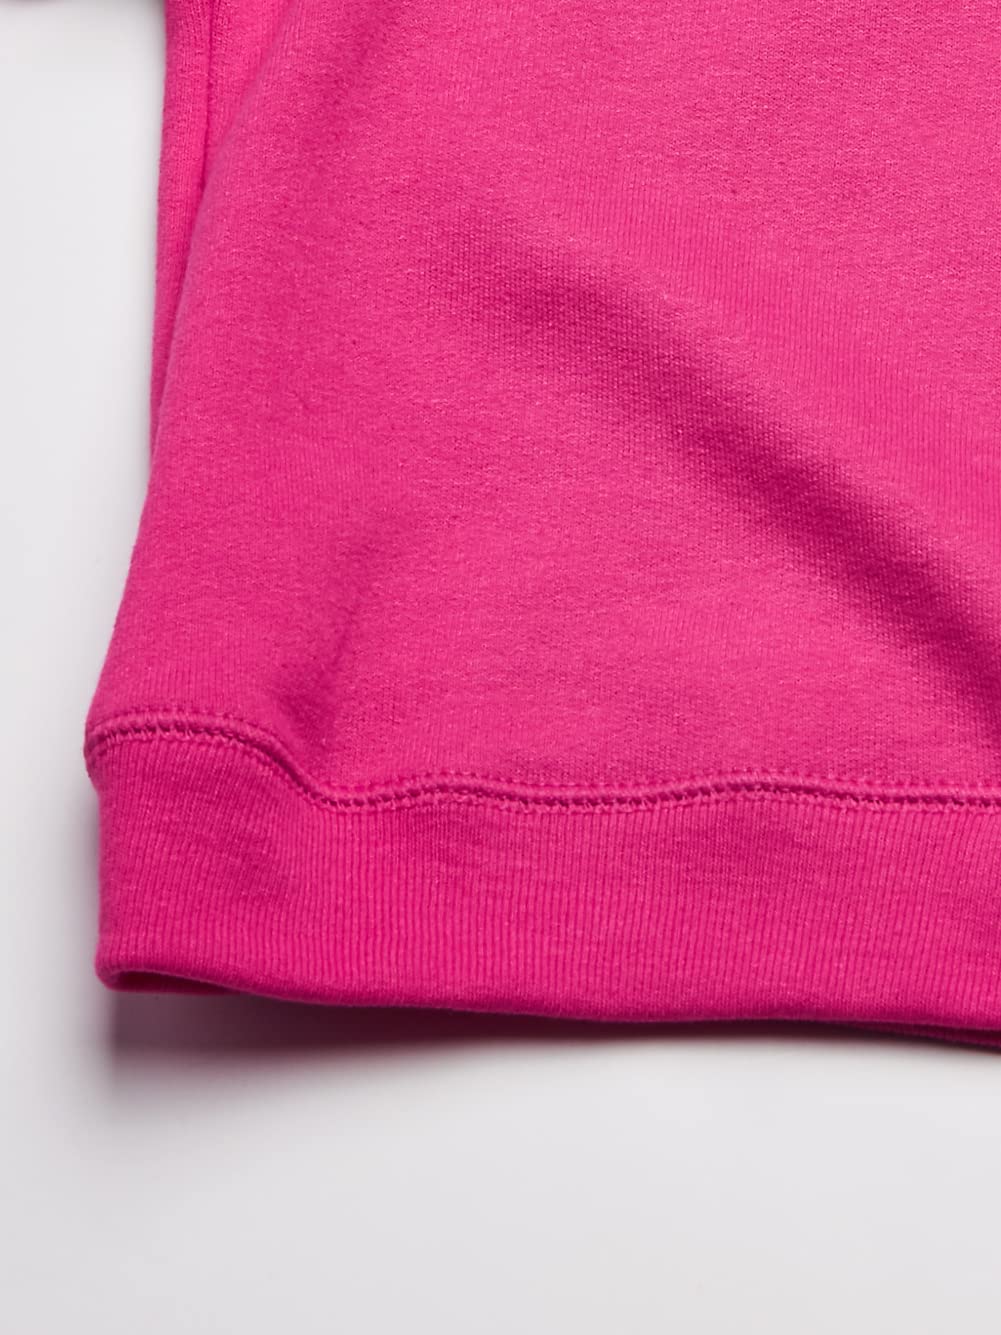 Hanes Girls EcoSmart Crewneck Sweatshirt, Soft Midweight Fleece Pullover for Girls